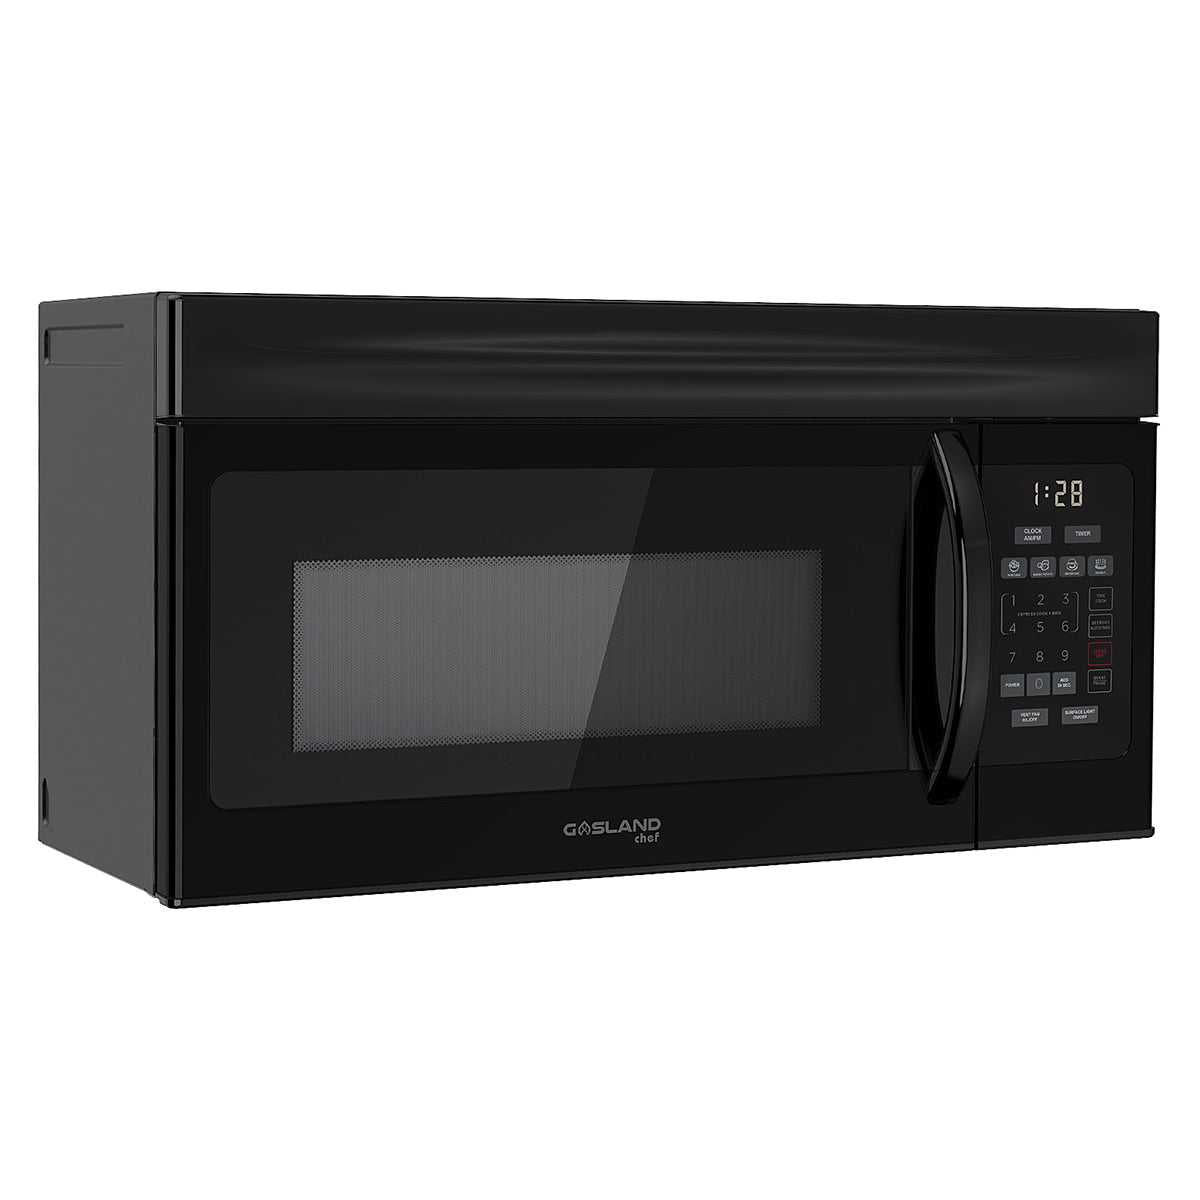 OTR Microwave Oven-OTR1603BN-GASLAND Chef